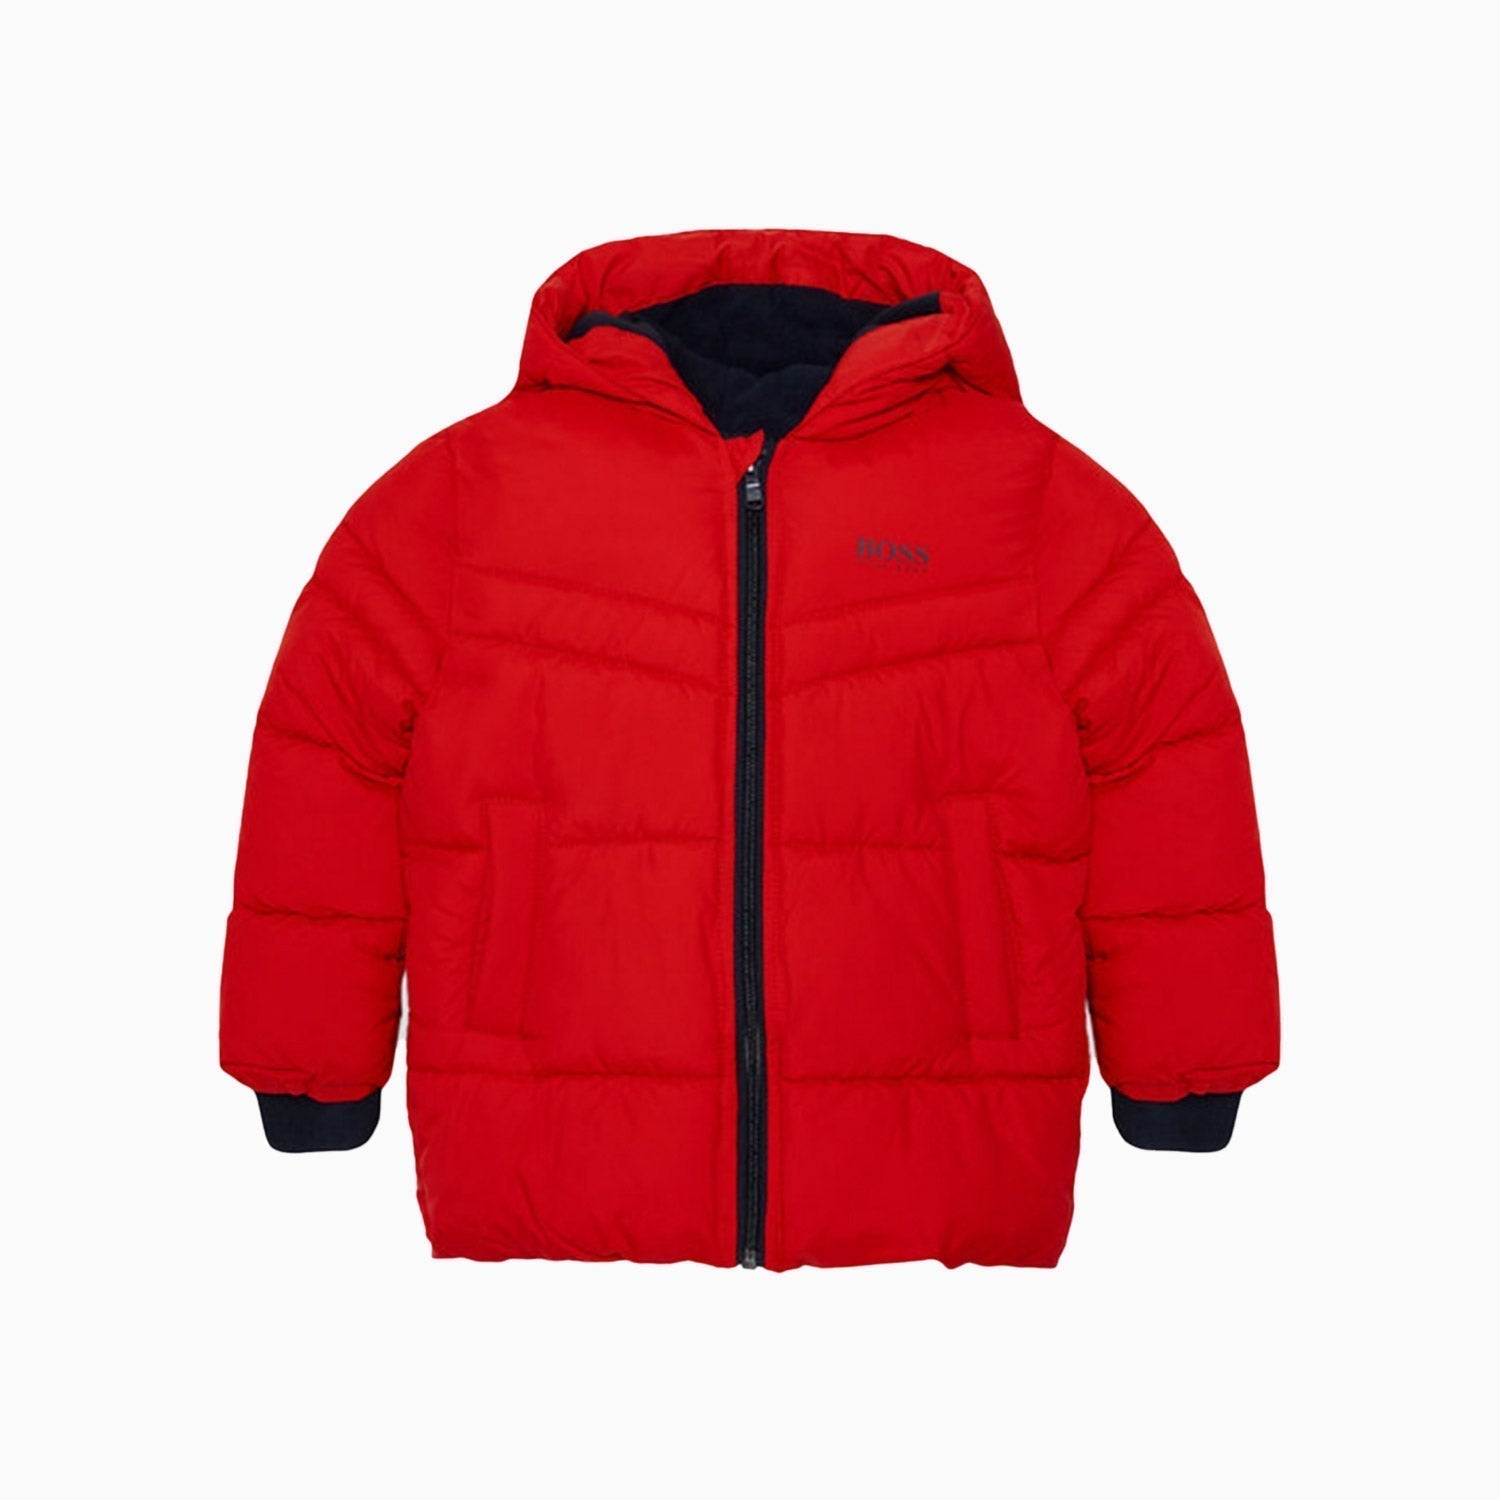 Hugo Boss Kid's Puffer Jacket - Color: Red - Kids Premium Clothing -